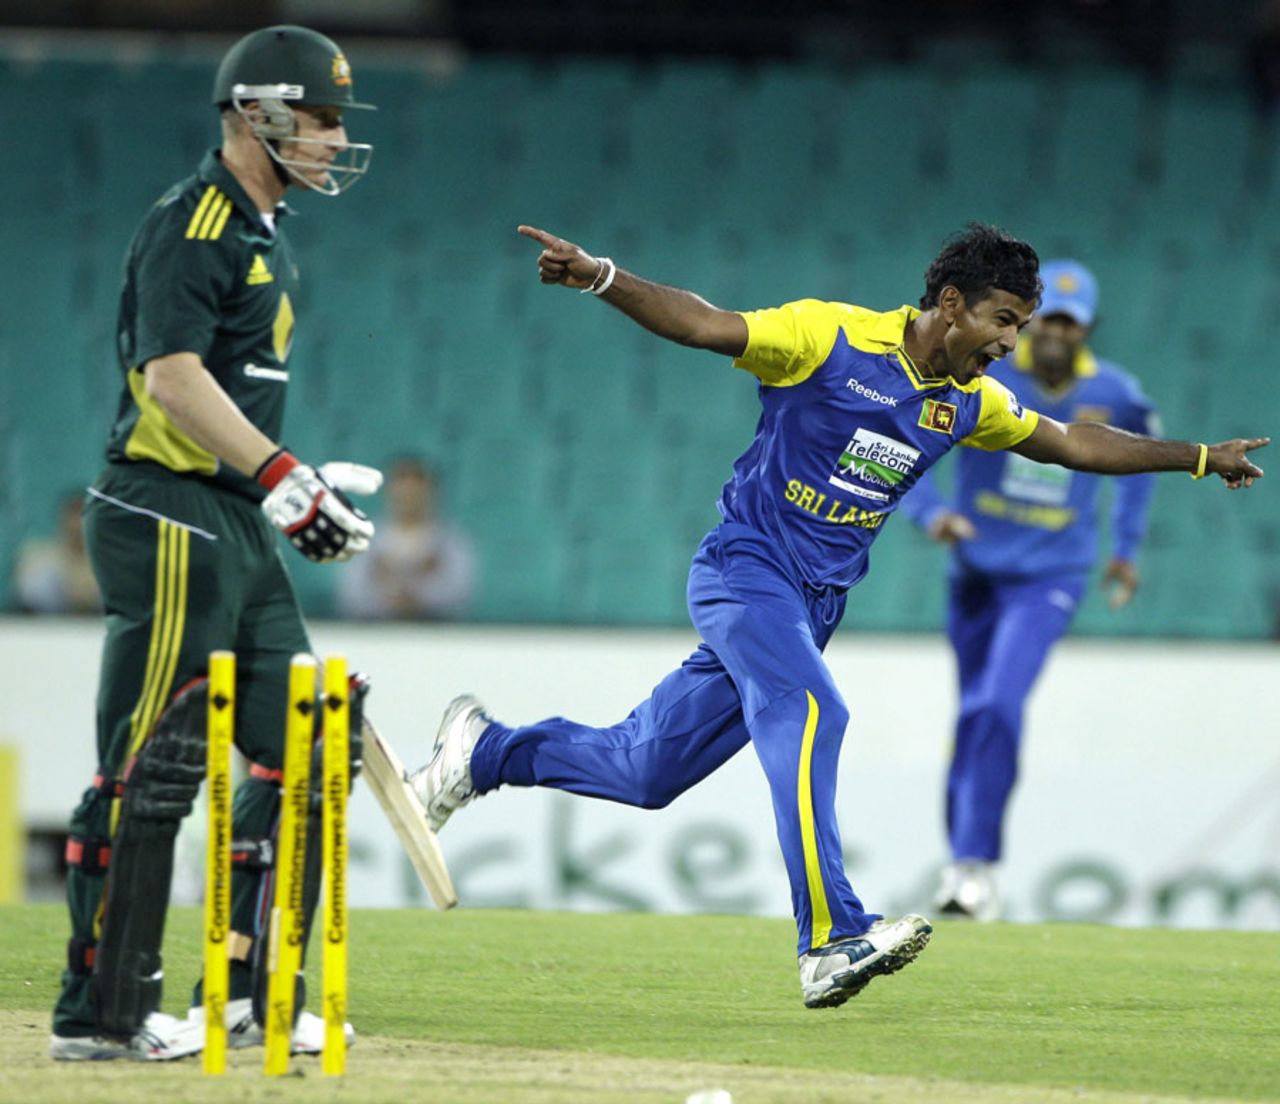 Nuwan Kulasekara is ecstatic after bowling Brad Haddin, Australia v Sri Lanka, 2nd ODI, Sydney, November 5, 2010 